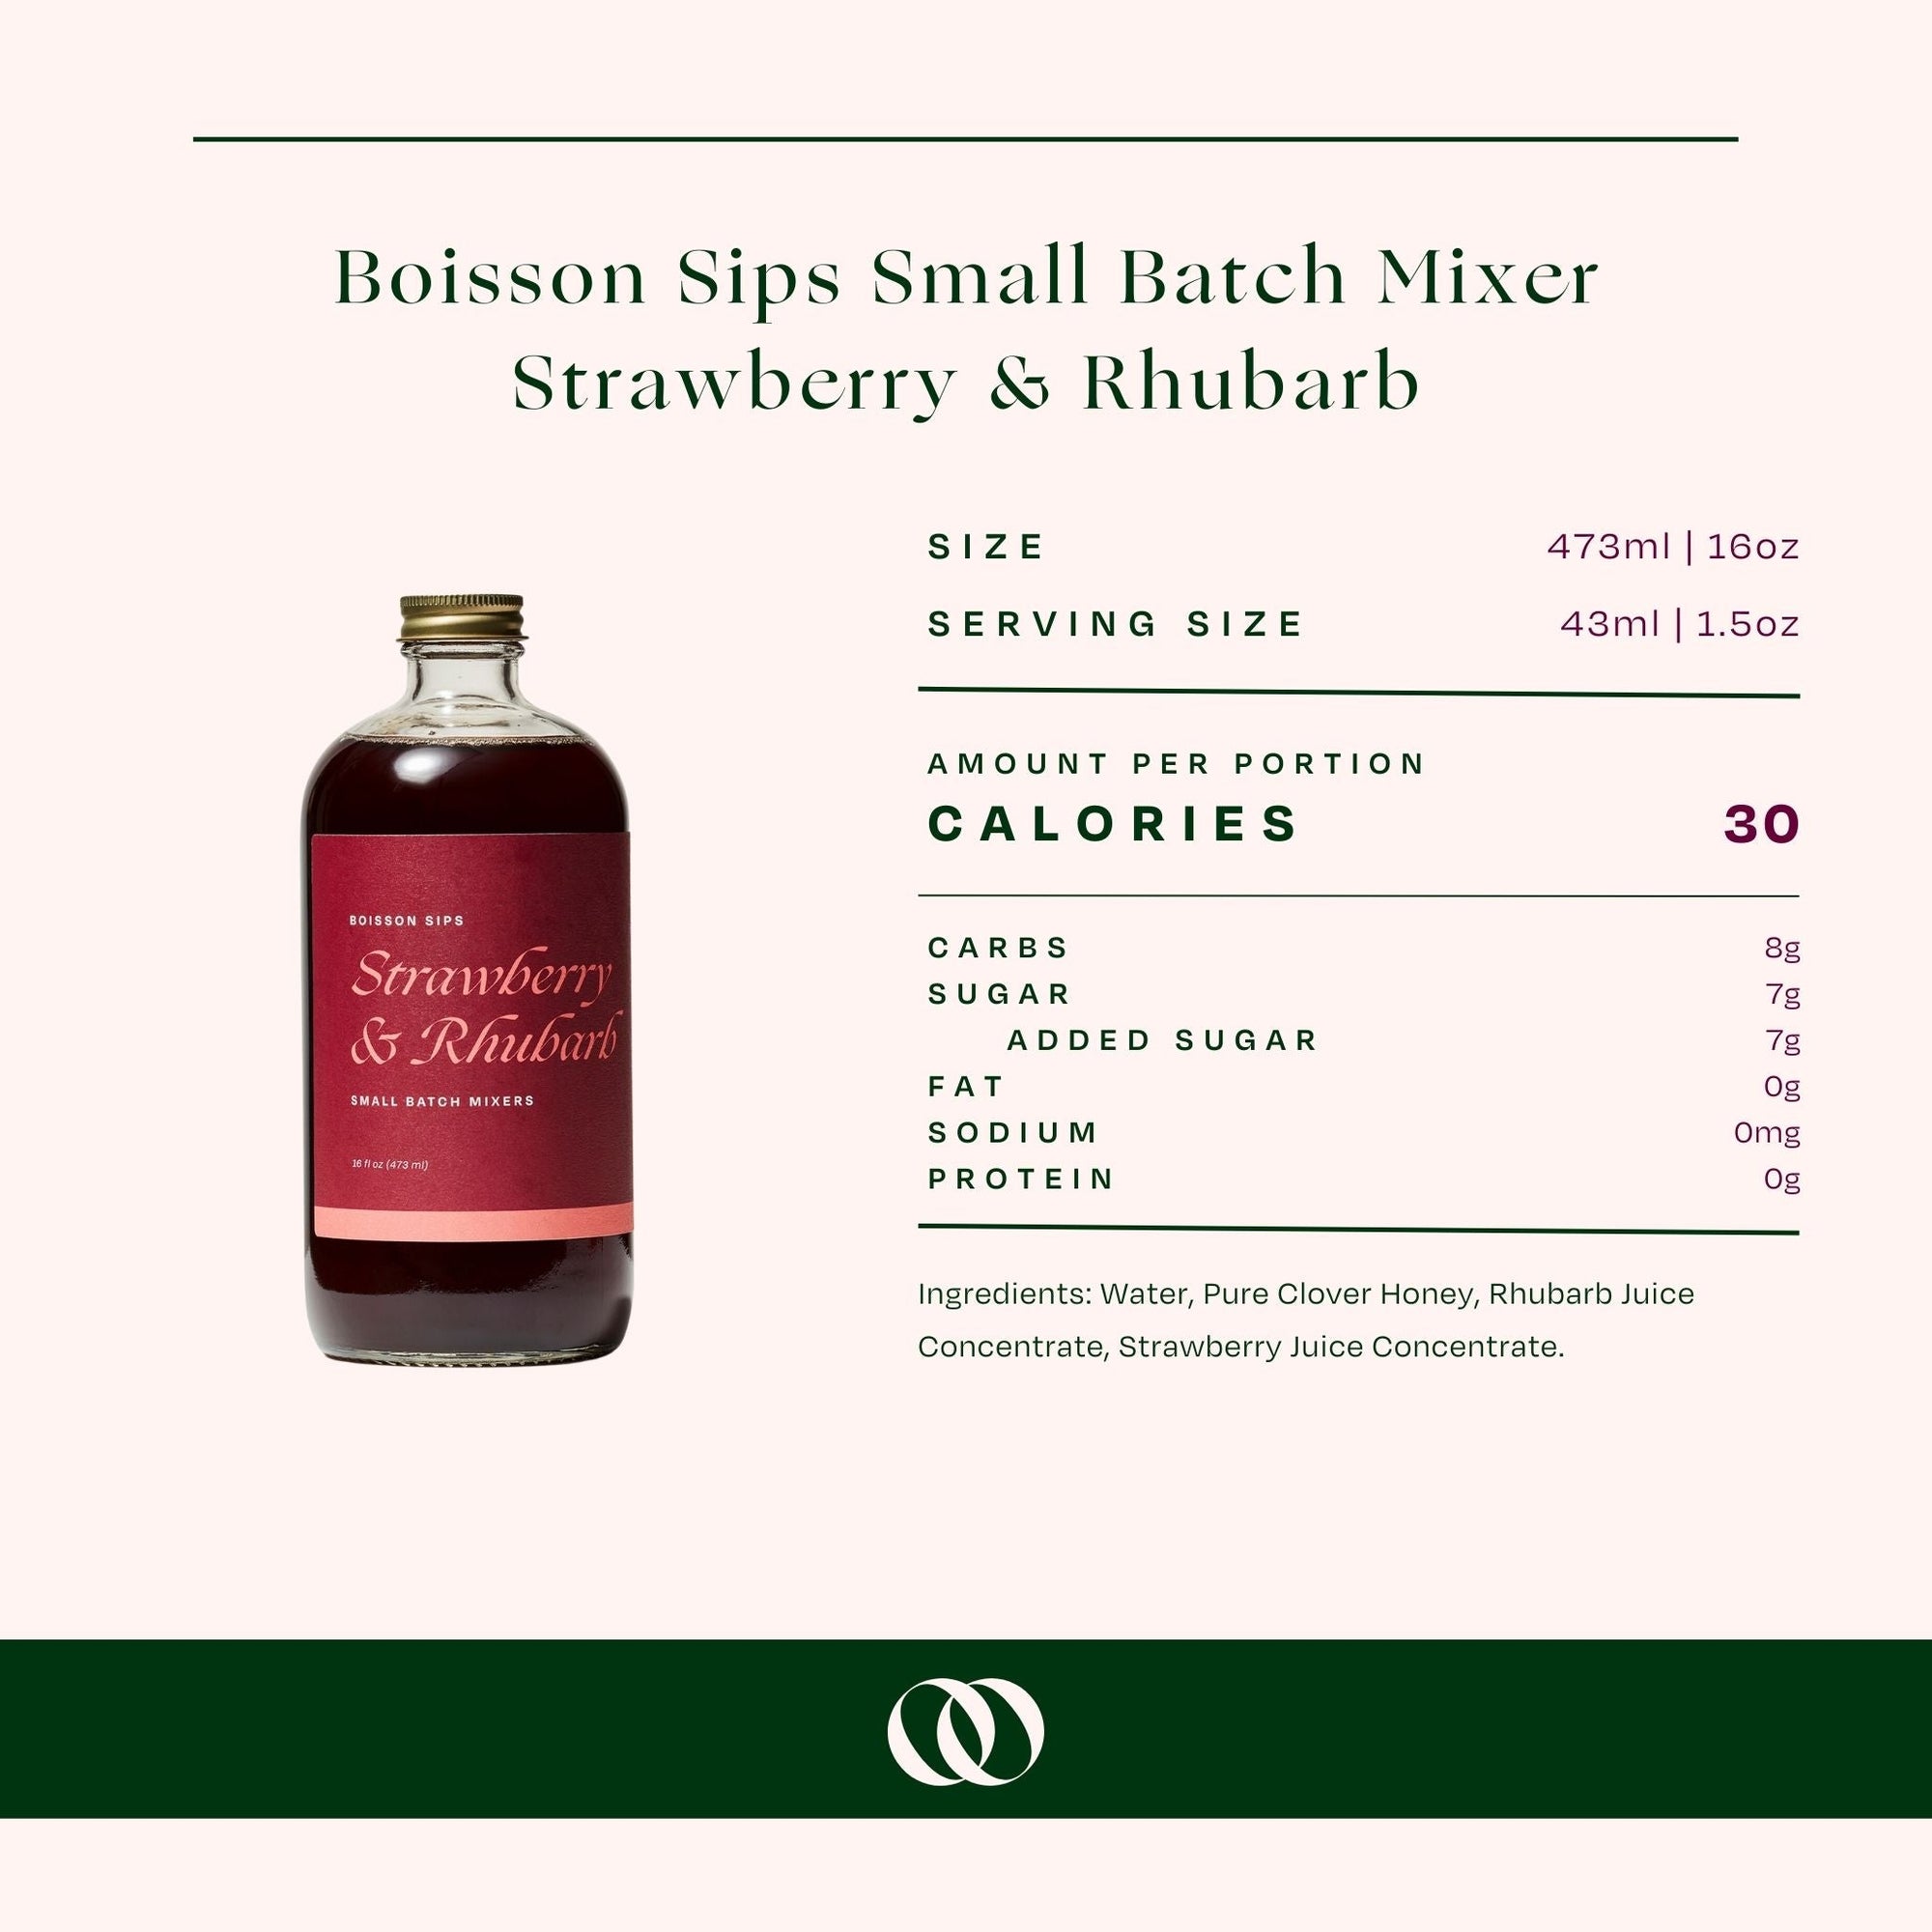 Wood Stove Kitchen - Boisson Sips Strawberry & Rhubarb Small Batch Mixers - Boisson